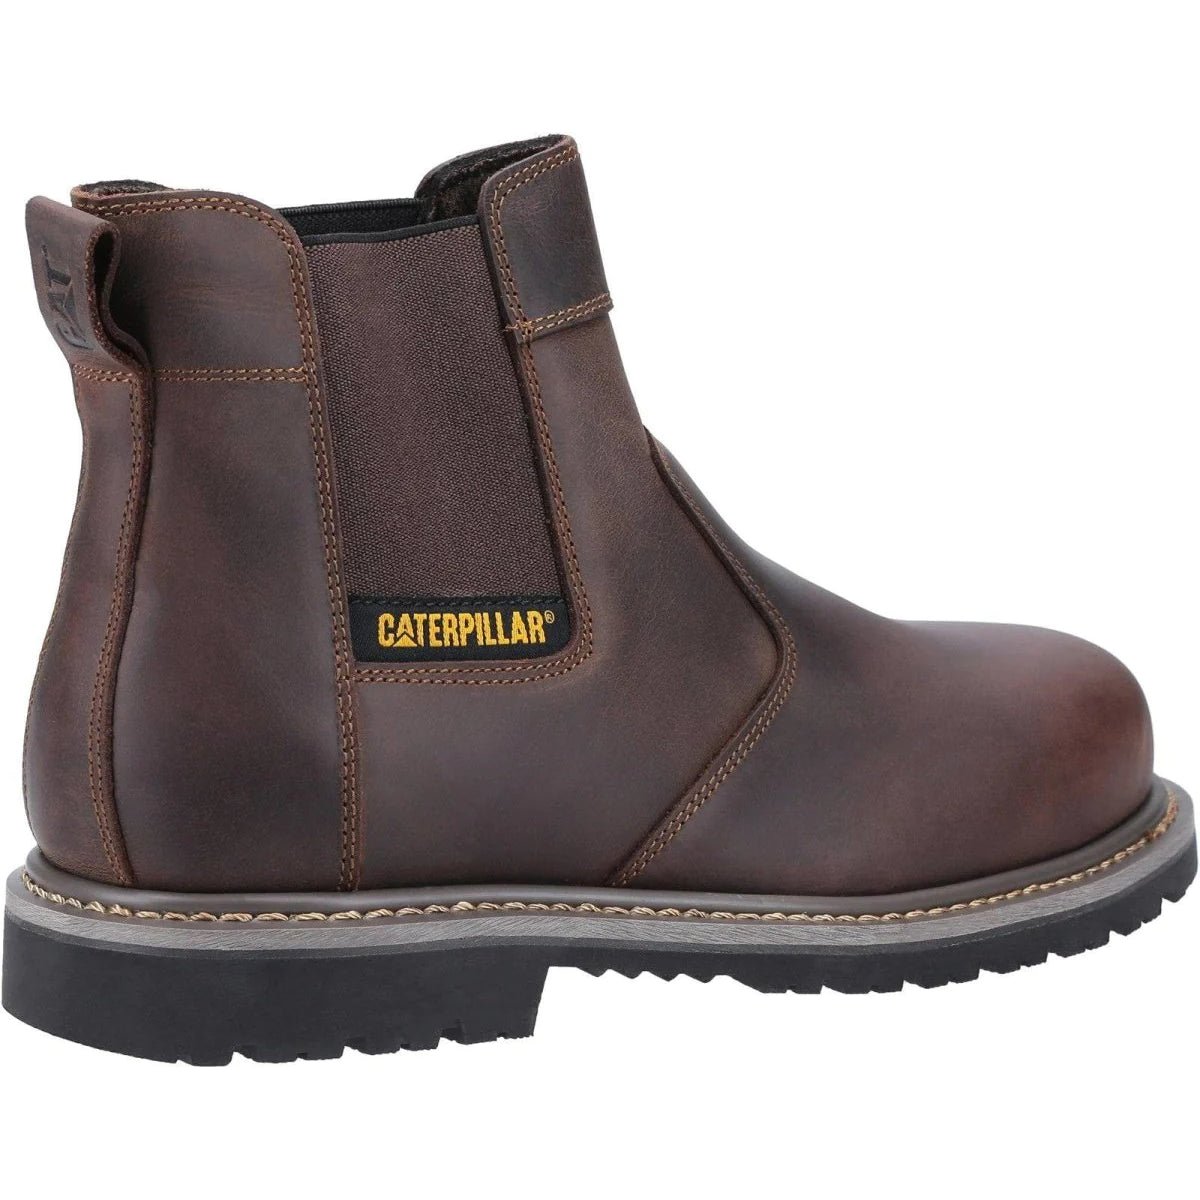 Caterpillar Powerplant Safety Dealer Boots - Shoe Store Direct